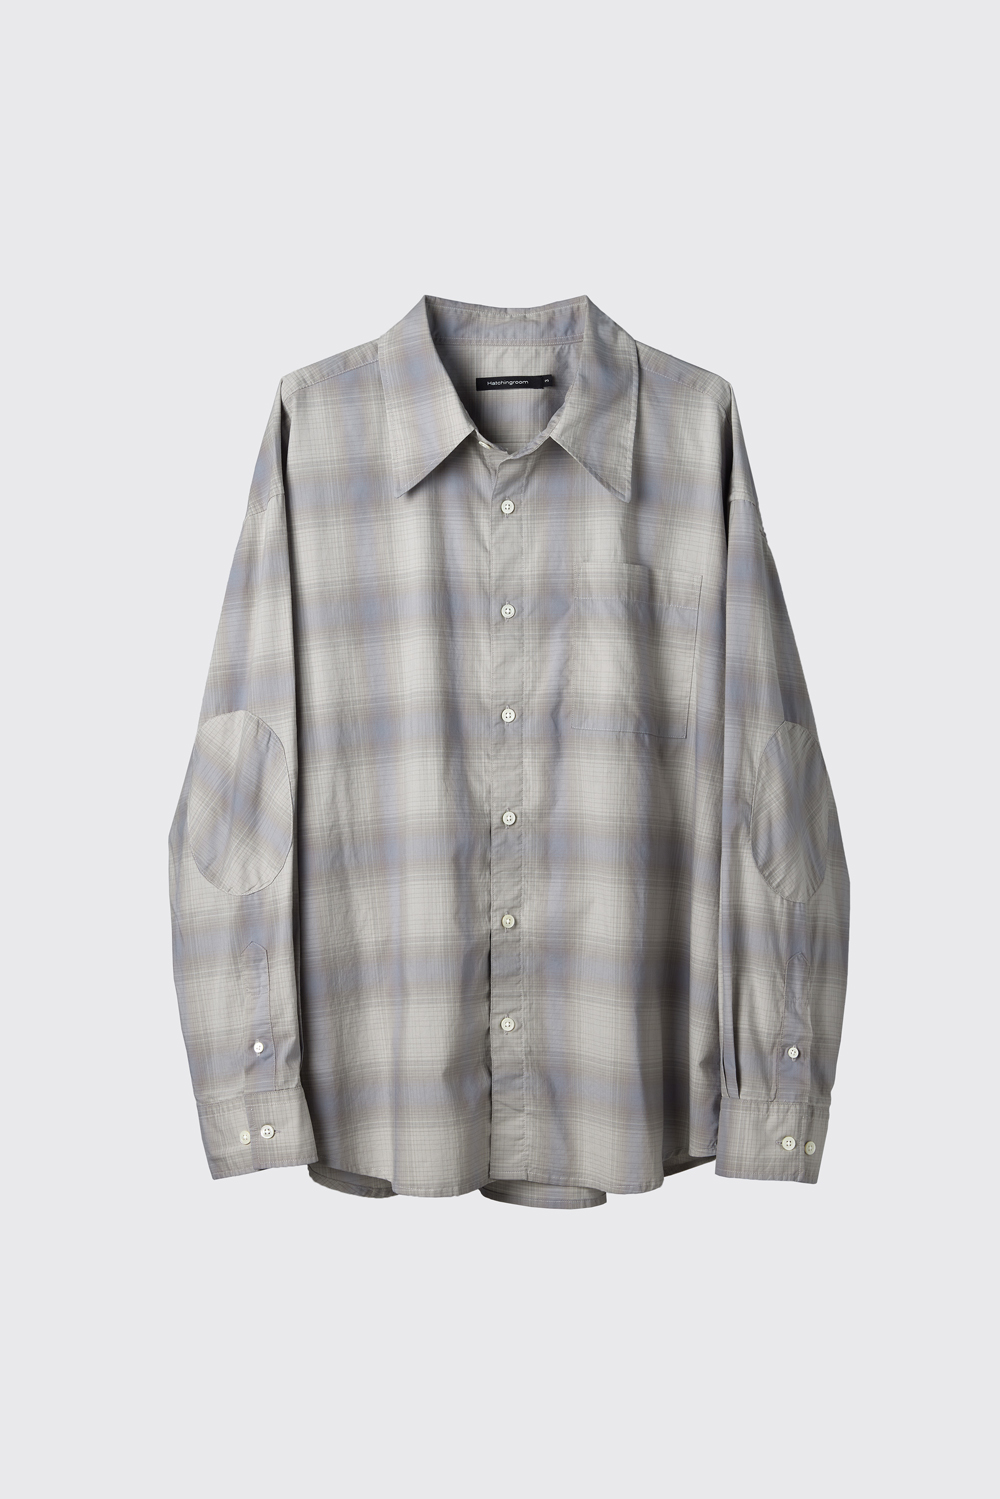 Archive Shirt V2 Warm Grey Check